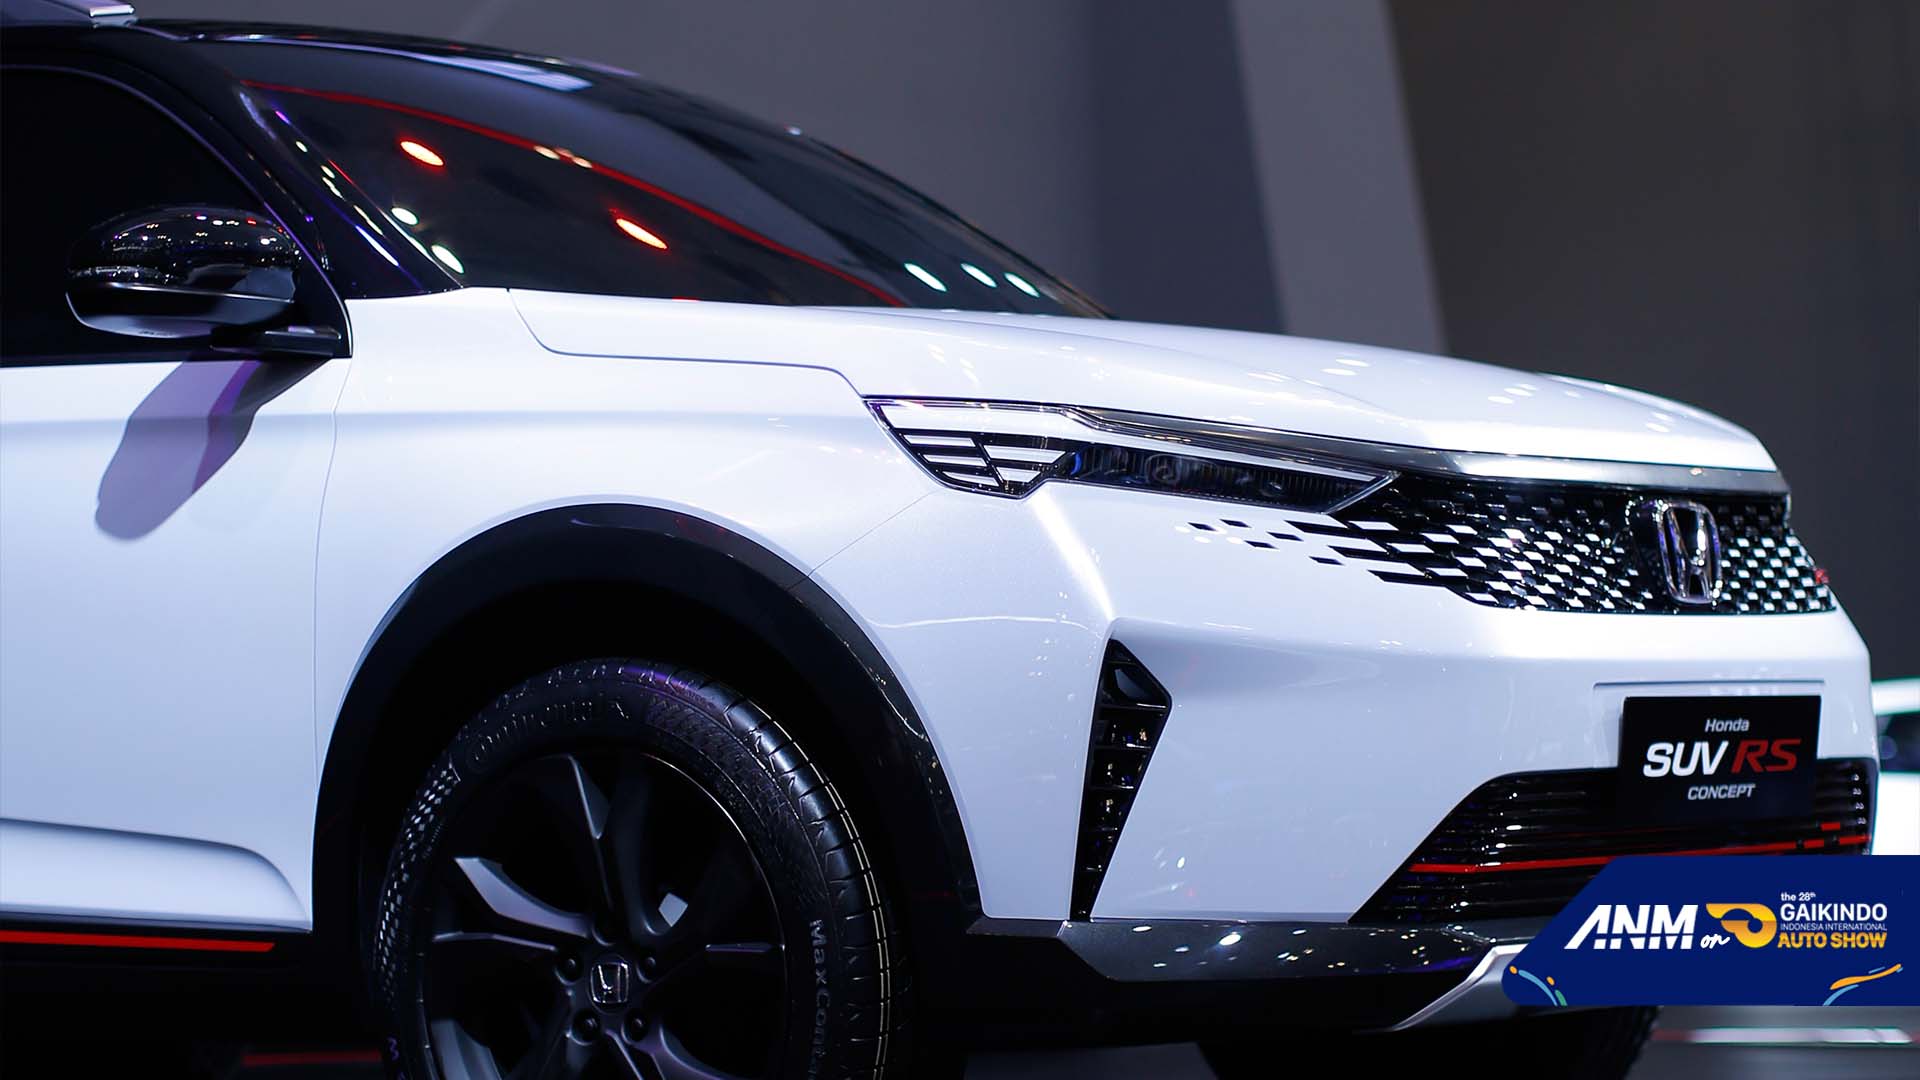 Berita, Honda SUV RS Concept Indonesia: GIIAS 2021 : Foto Lengkap Honda SUV RS Concept, Emang Ganteng!